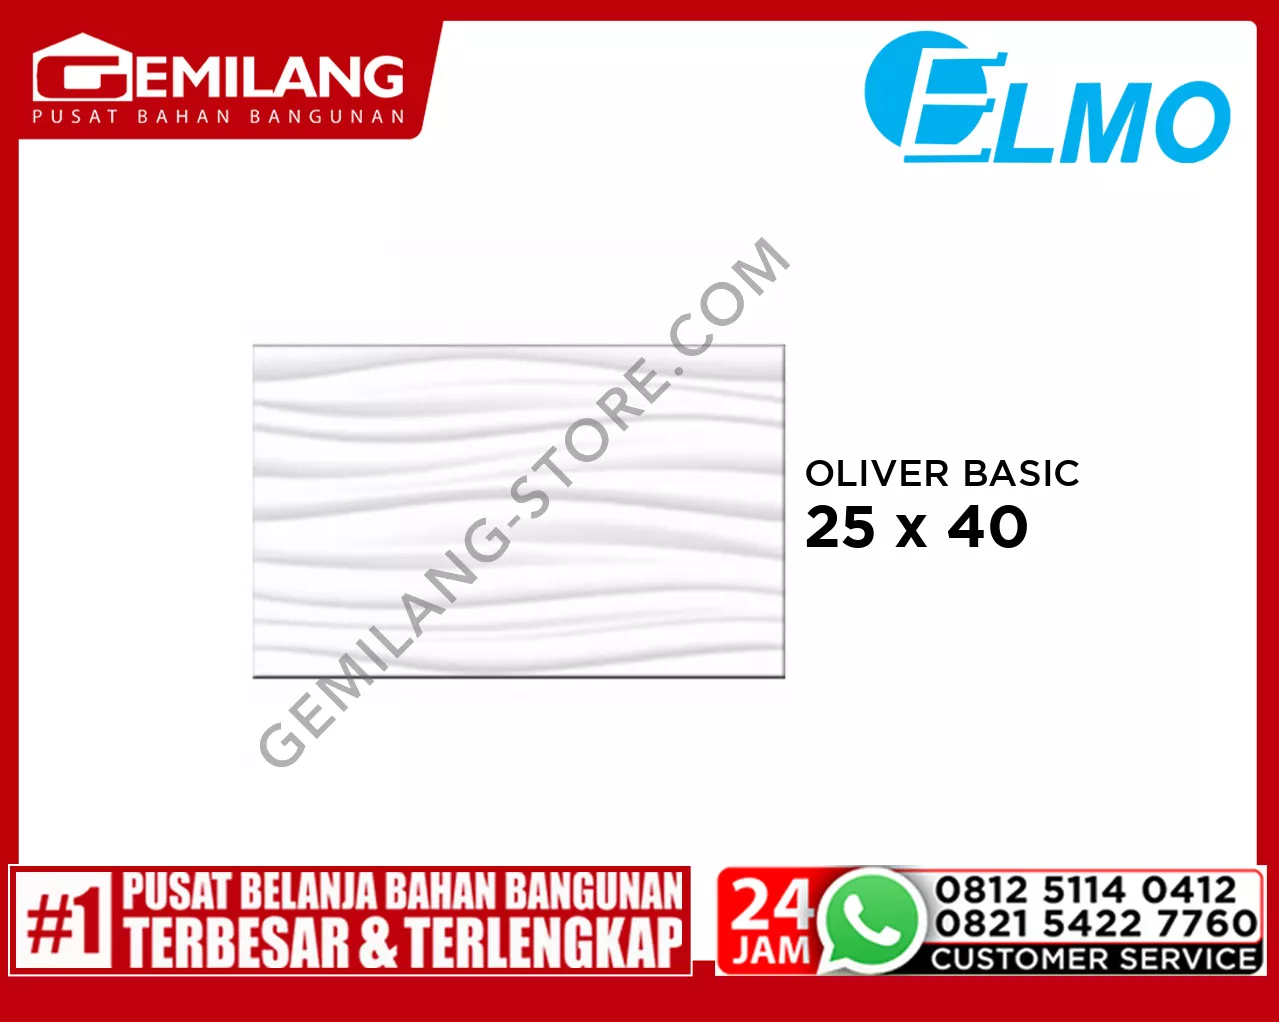 ELMO OLIVER BASIC 25 x 40